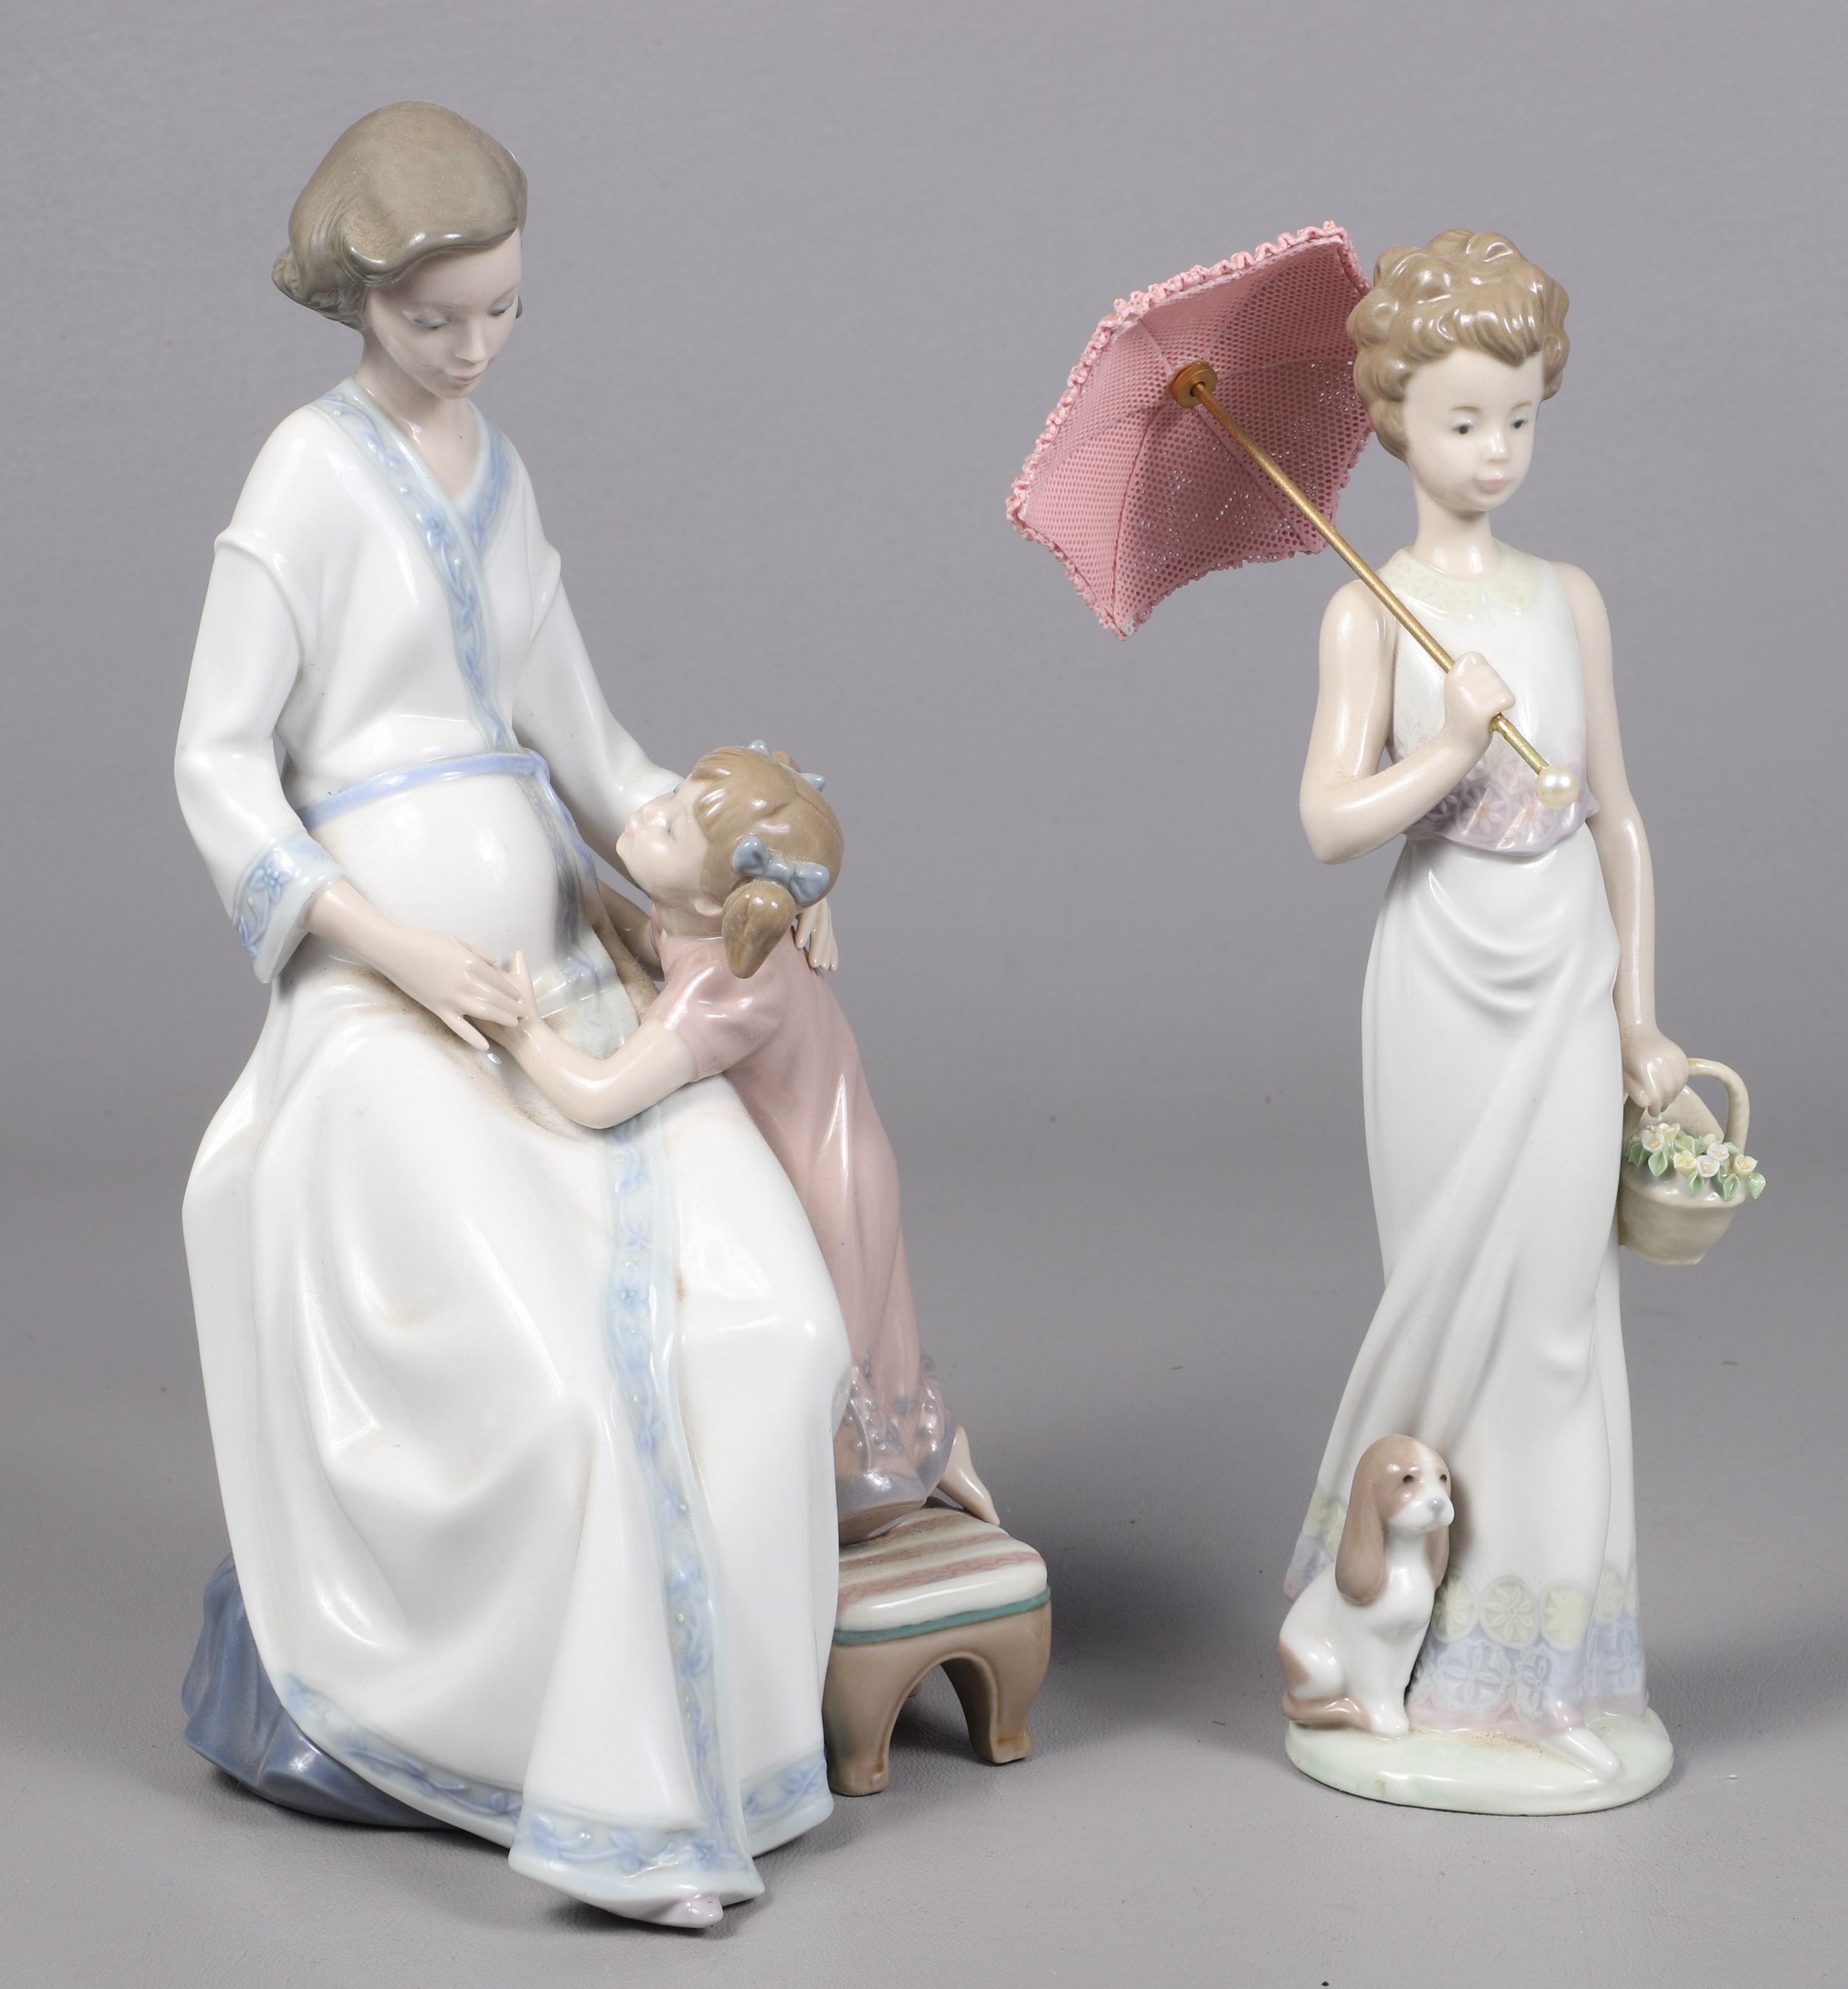  2 SIgned Lladro porcelain figurines  2e0bba